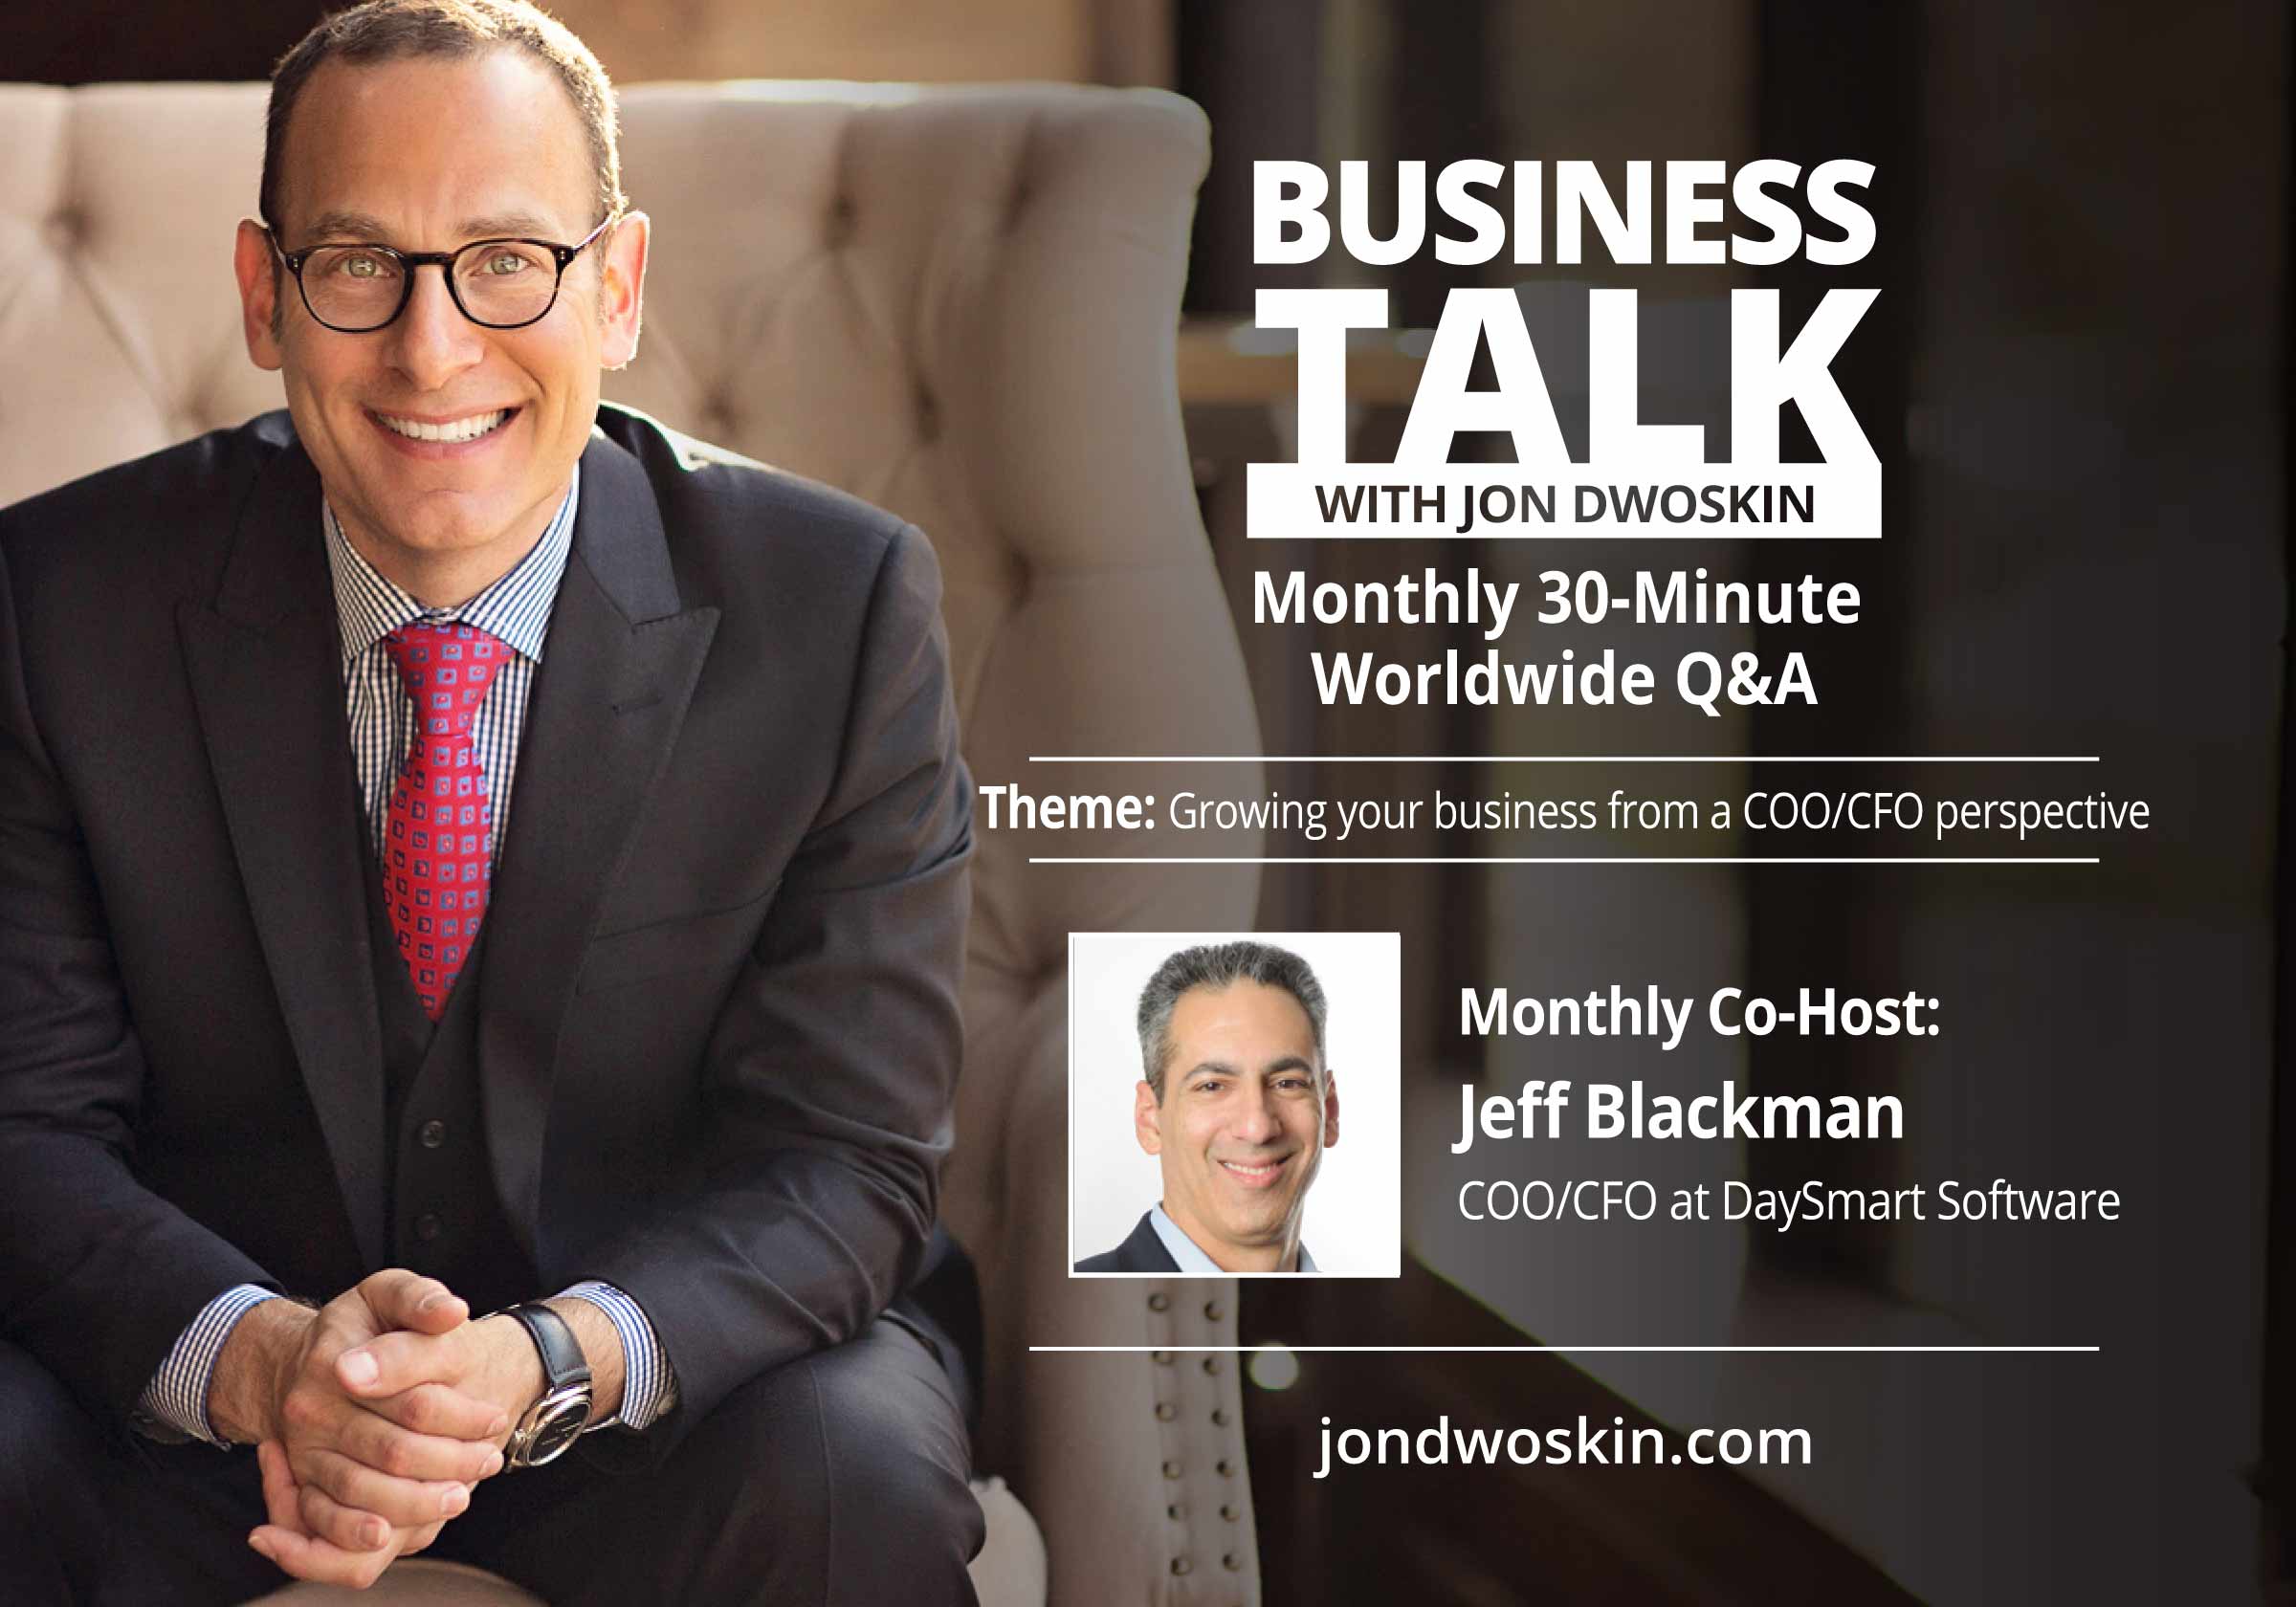 THINK Business Podcast - Jon Dwoskin Interviews Jeff Blackman